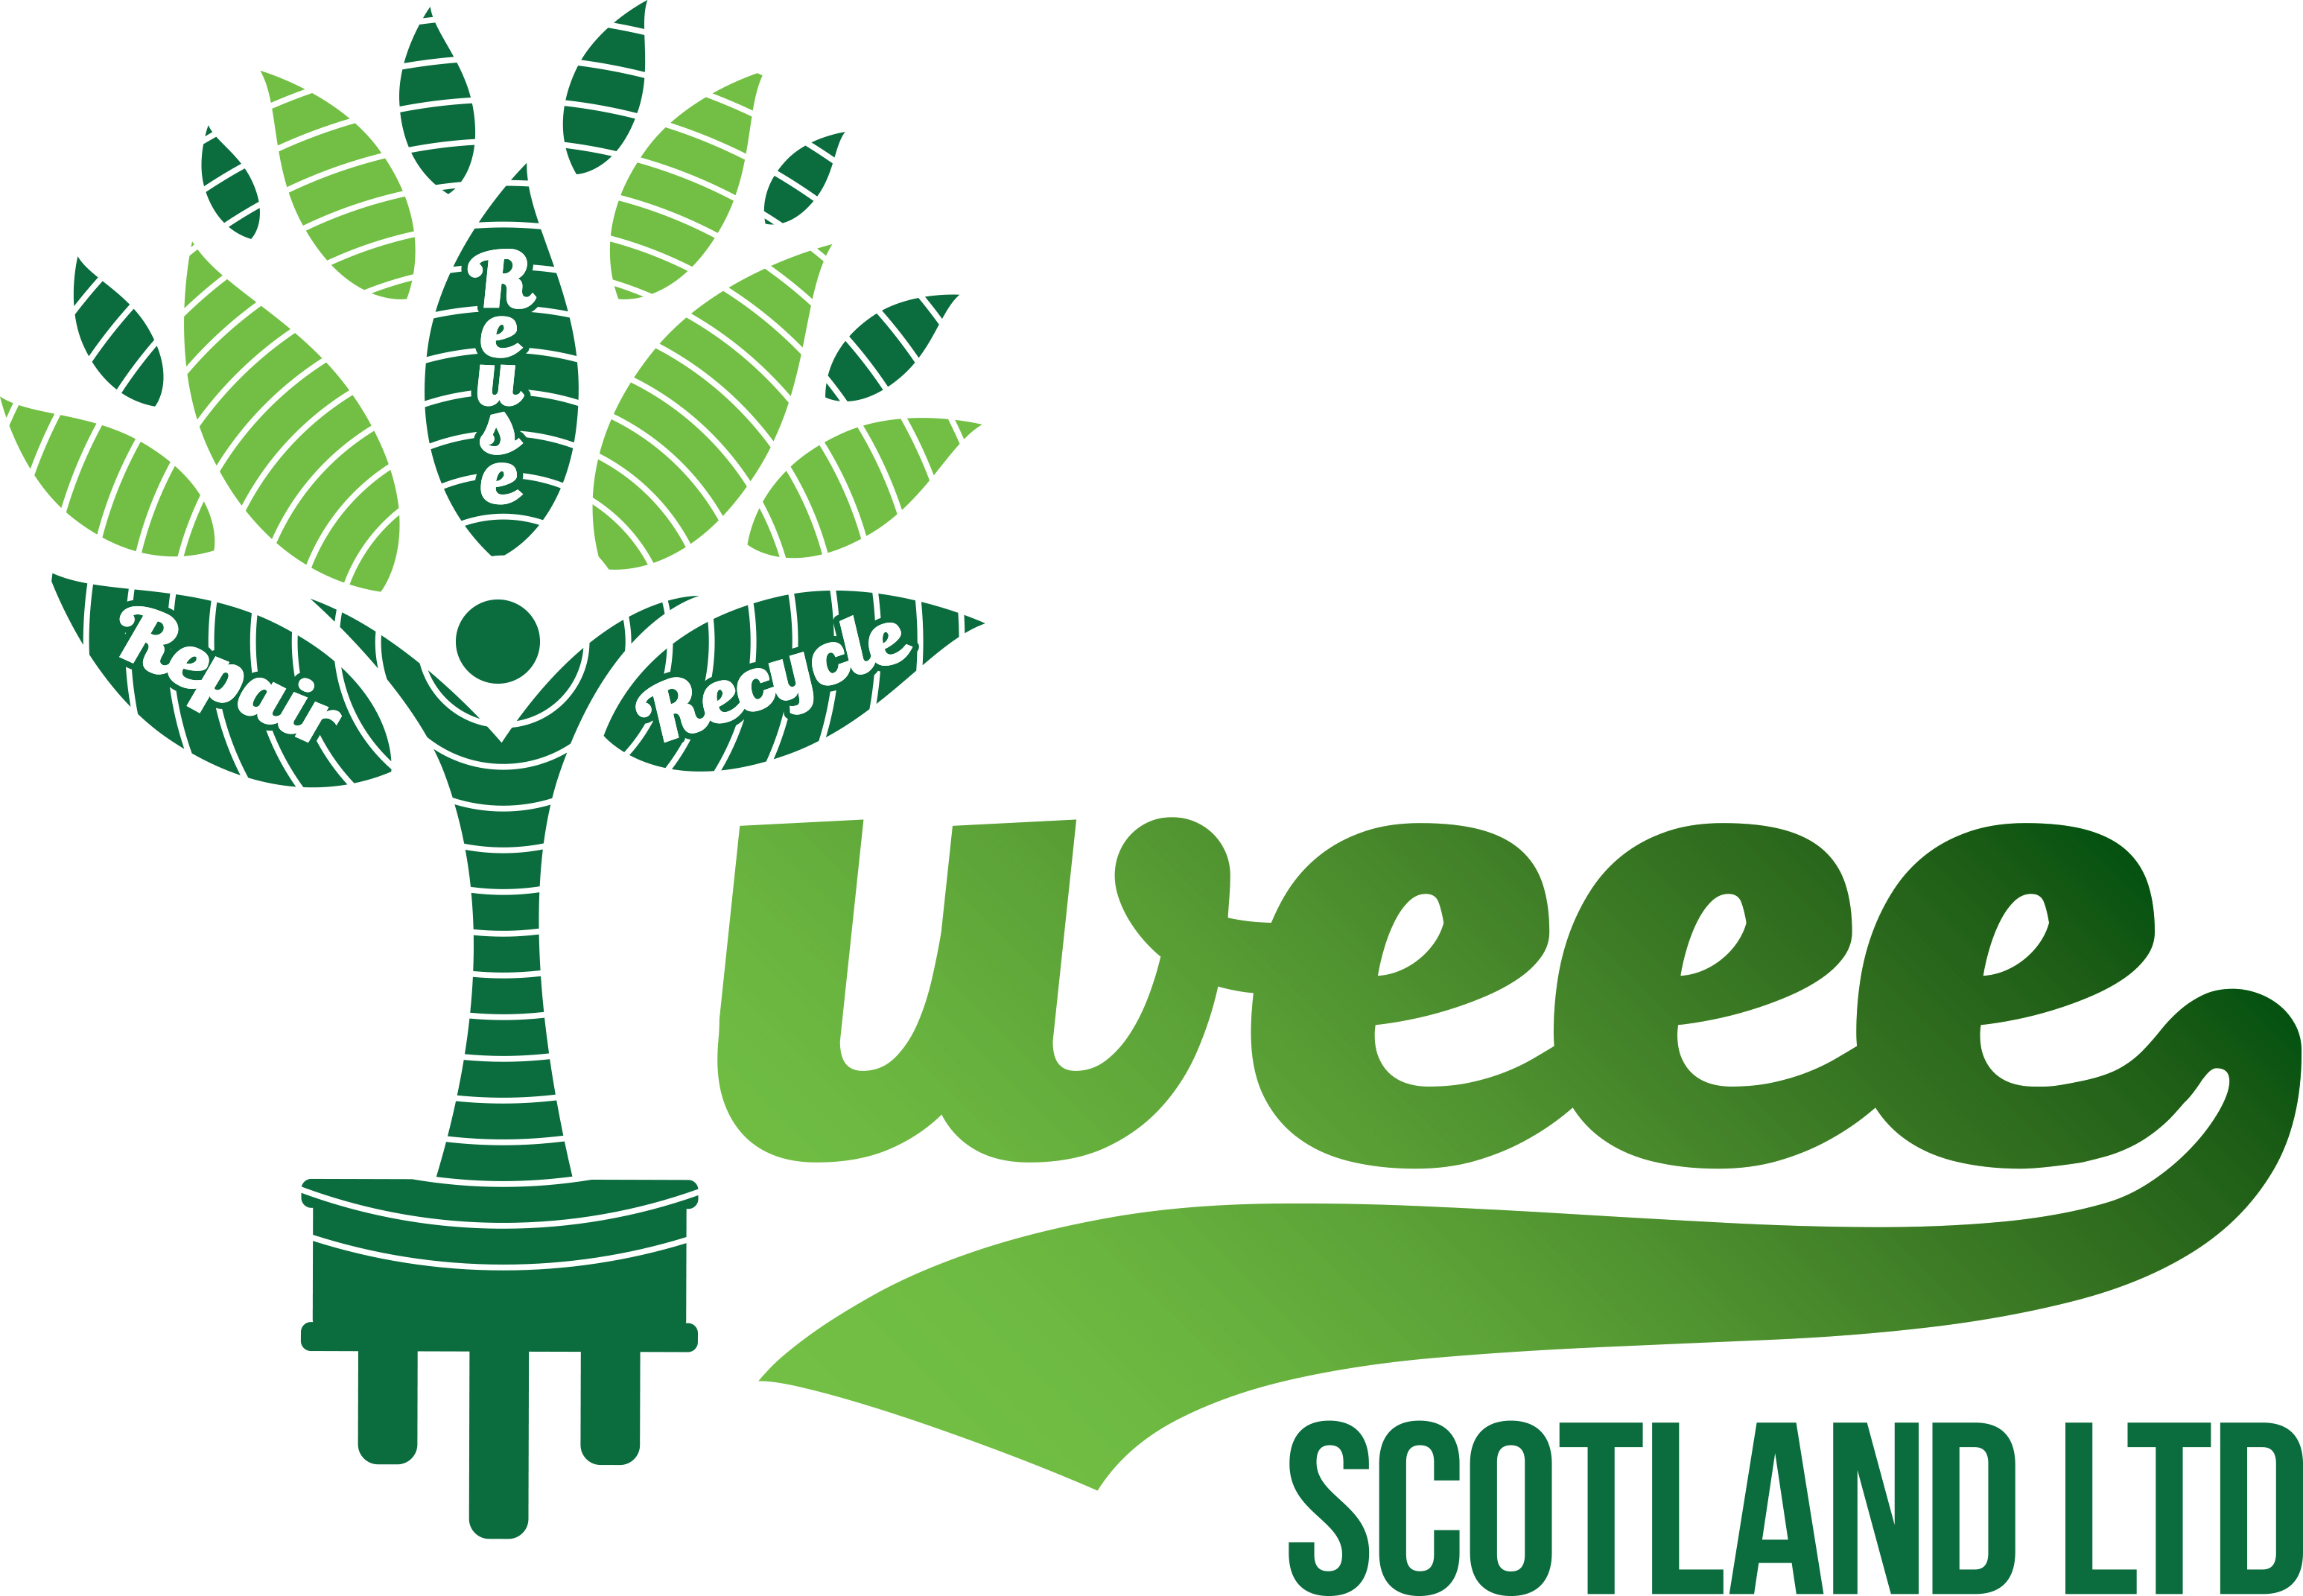 WEEE-Scotland-logo-full-size.jpg